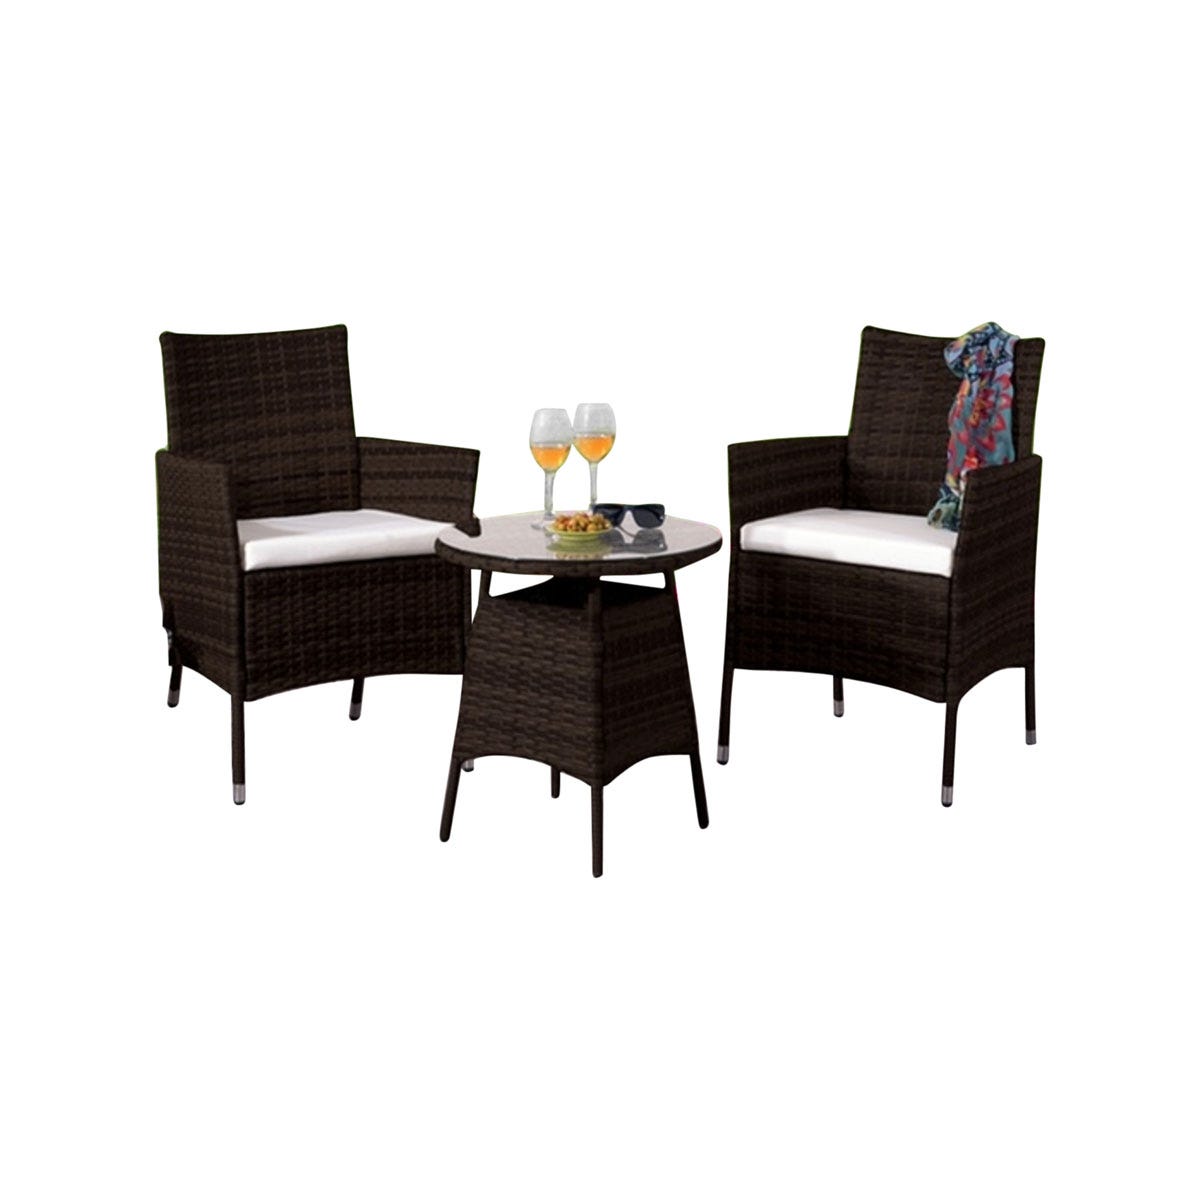 3Pc Rattan Bistro Set Garden Patio Furniture - 2 Chairs & Coffee Table - Chocolate Brown